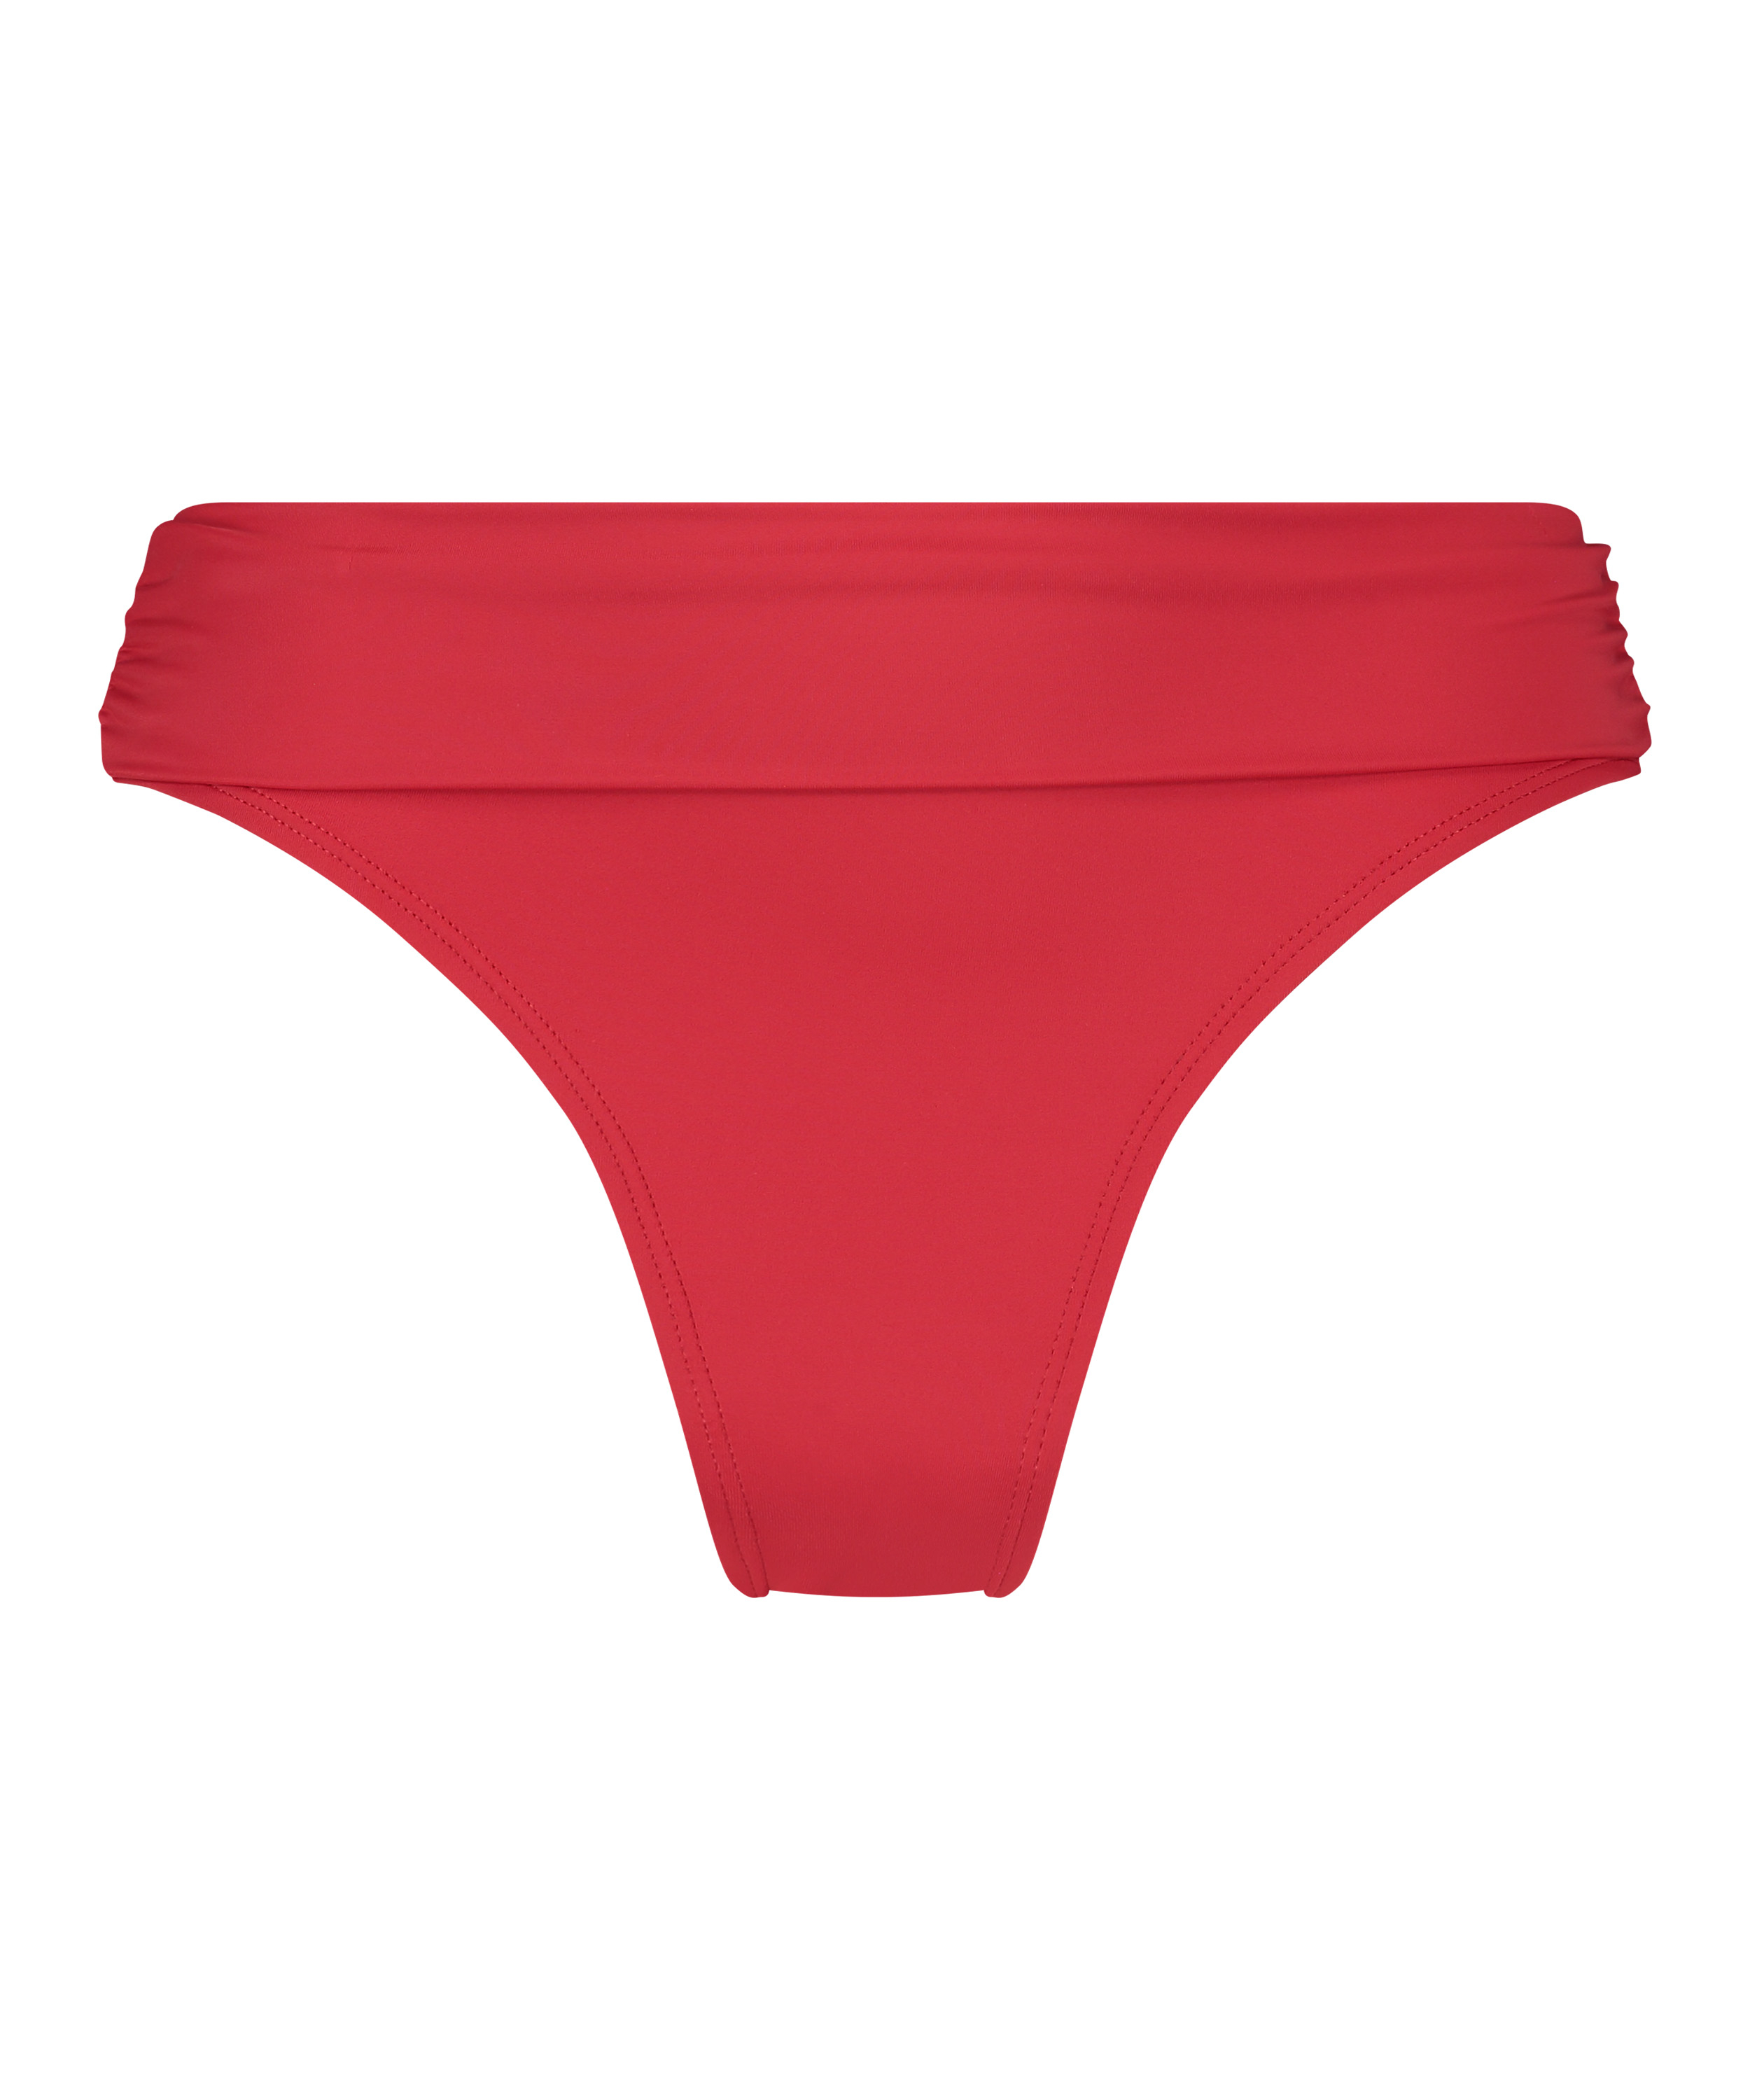 Majtki Bikini Rio Luxe, Czerwony, main